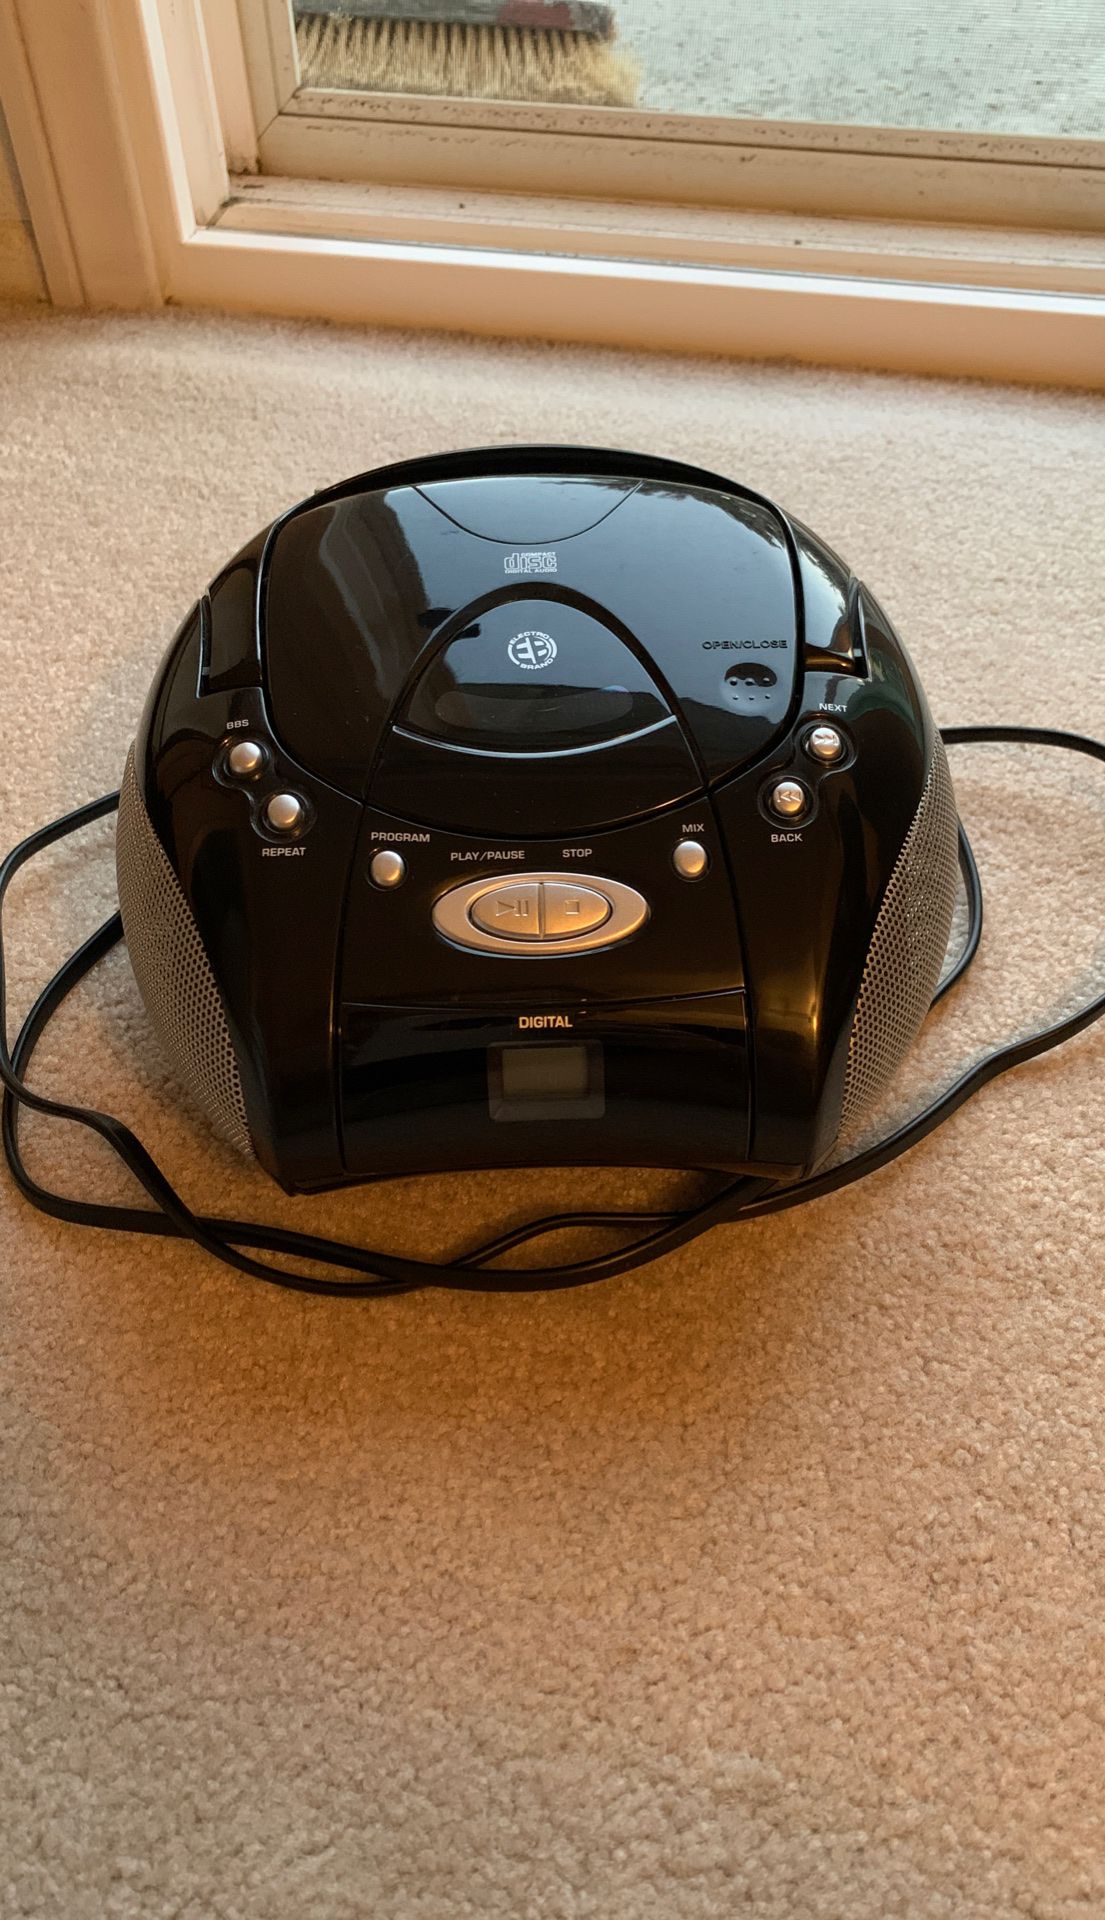 Intertek portable radio/CD player